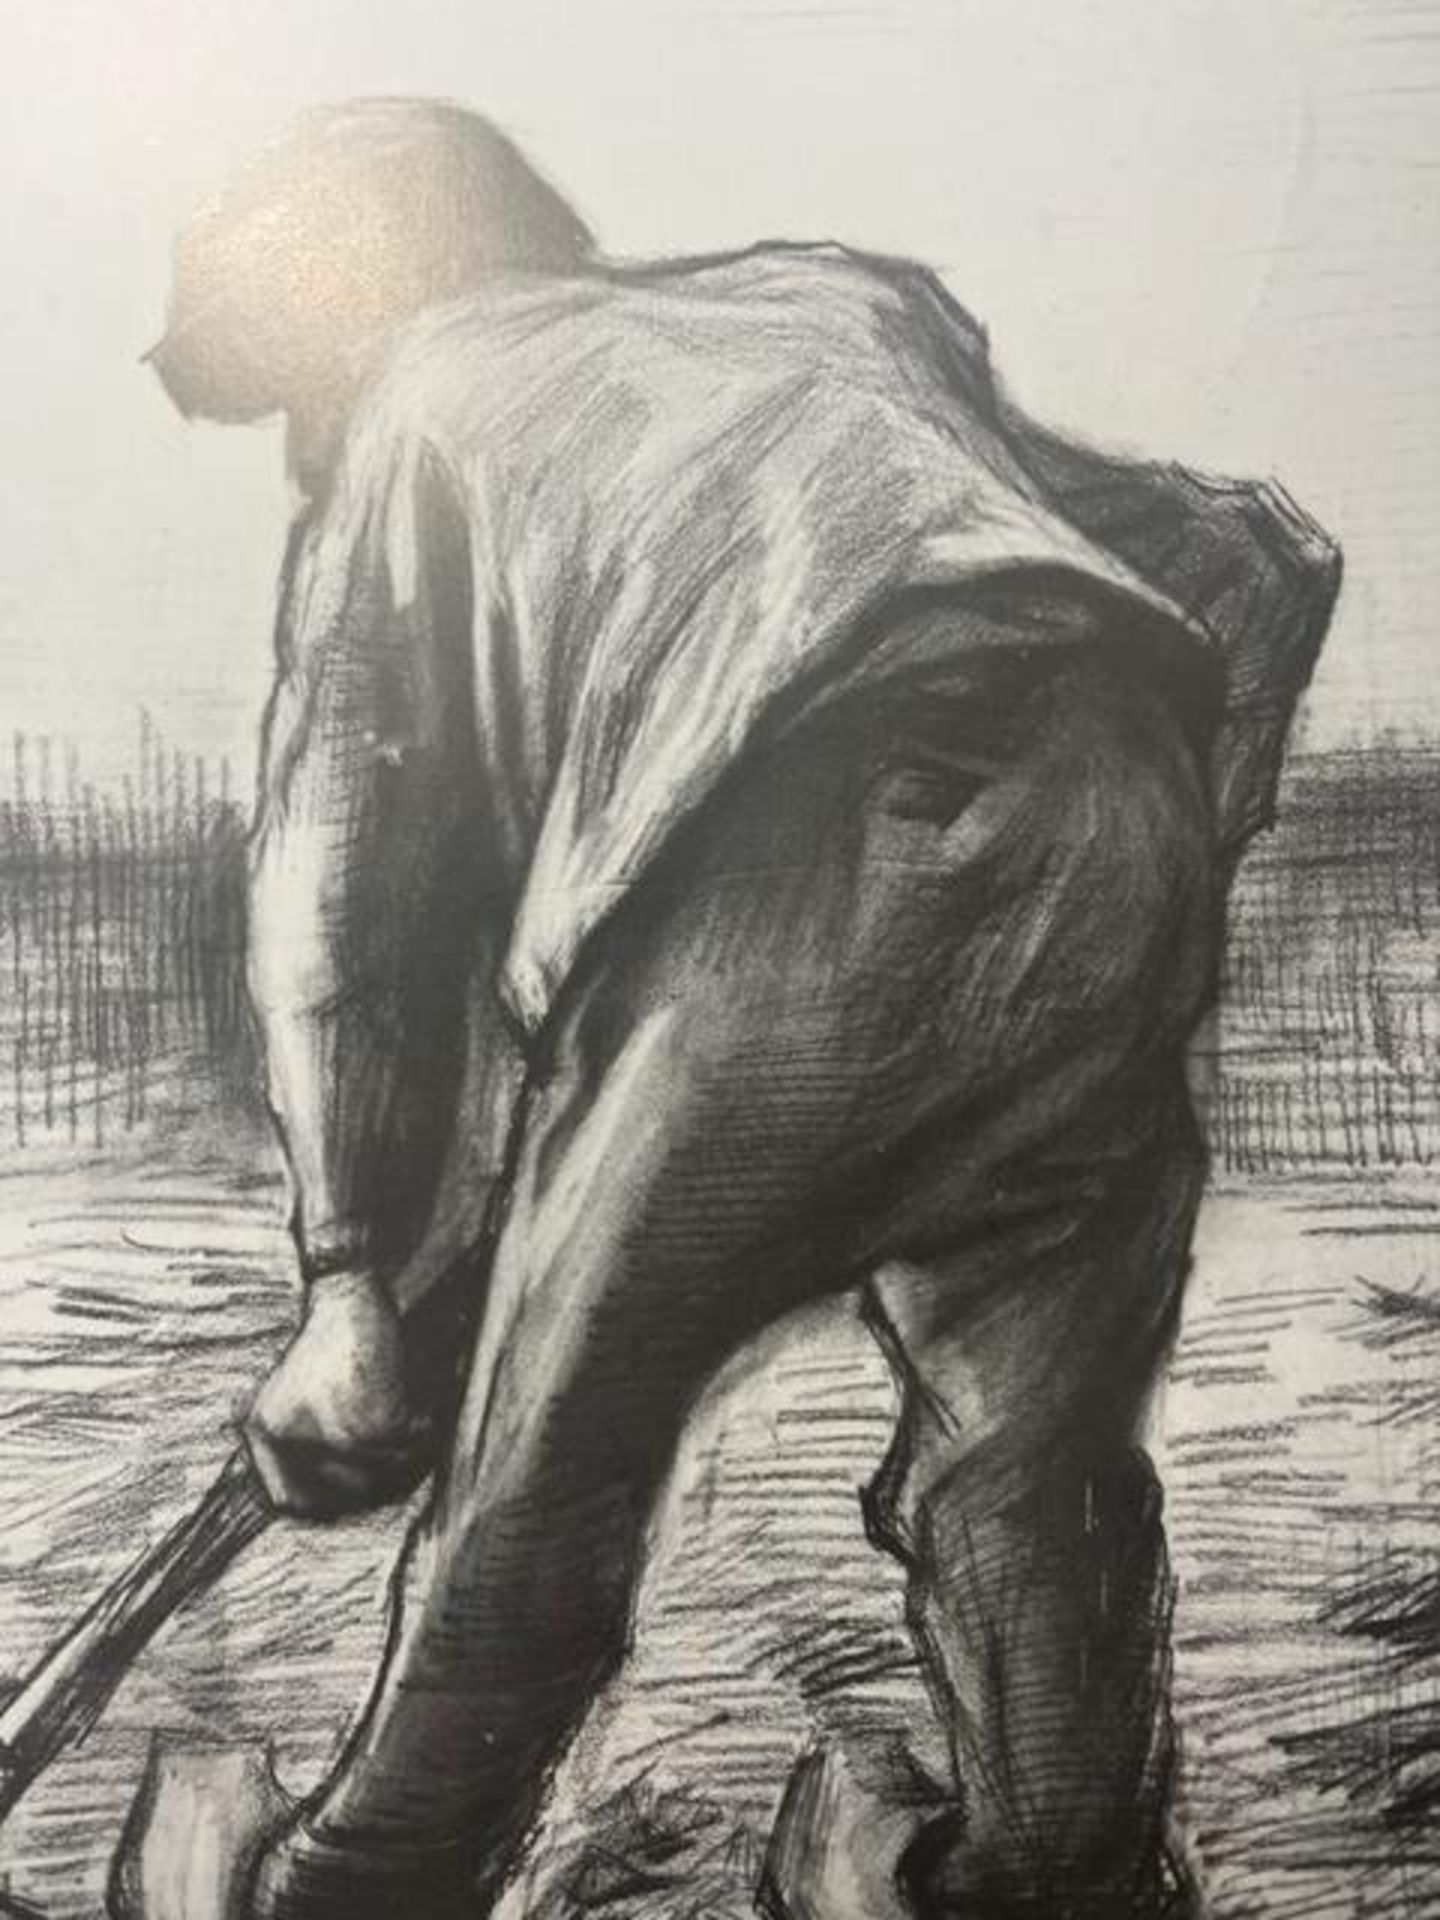 Vincent van Gogh "Peasant Digging" Print. - Bild 2 aus 6